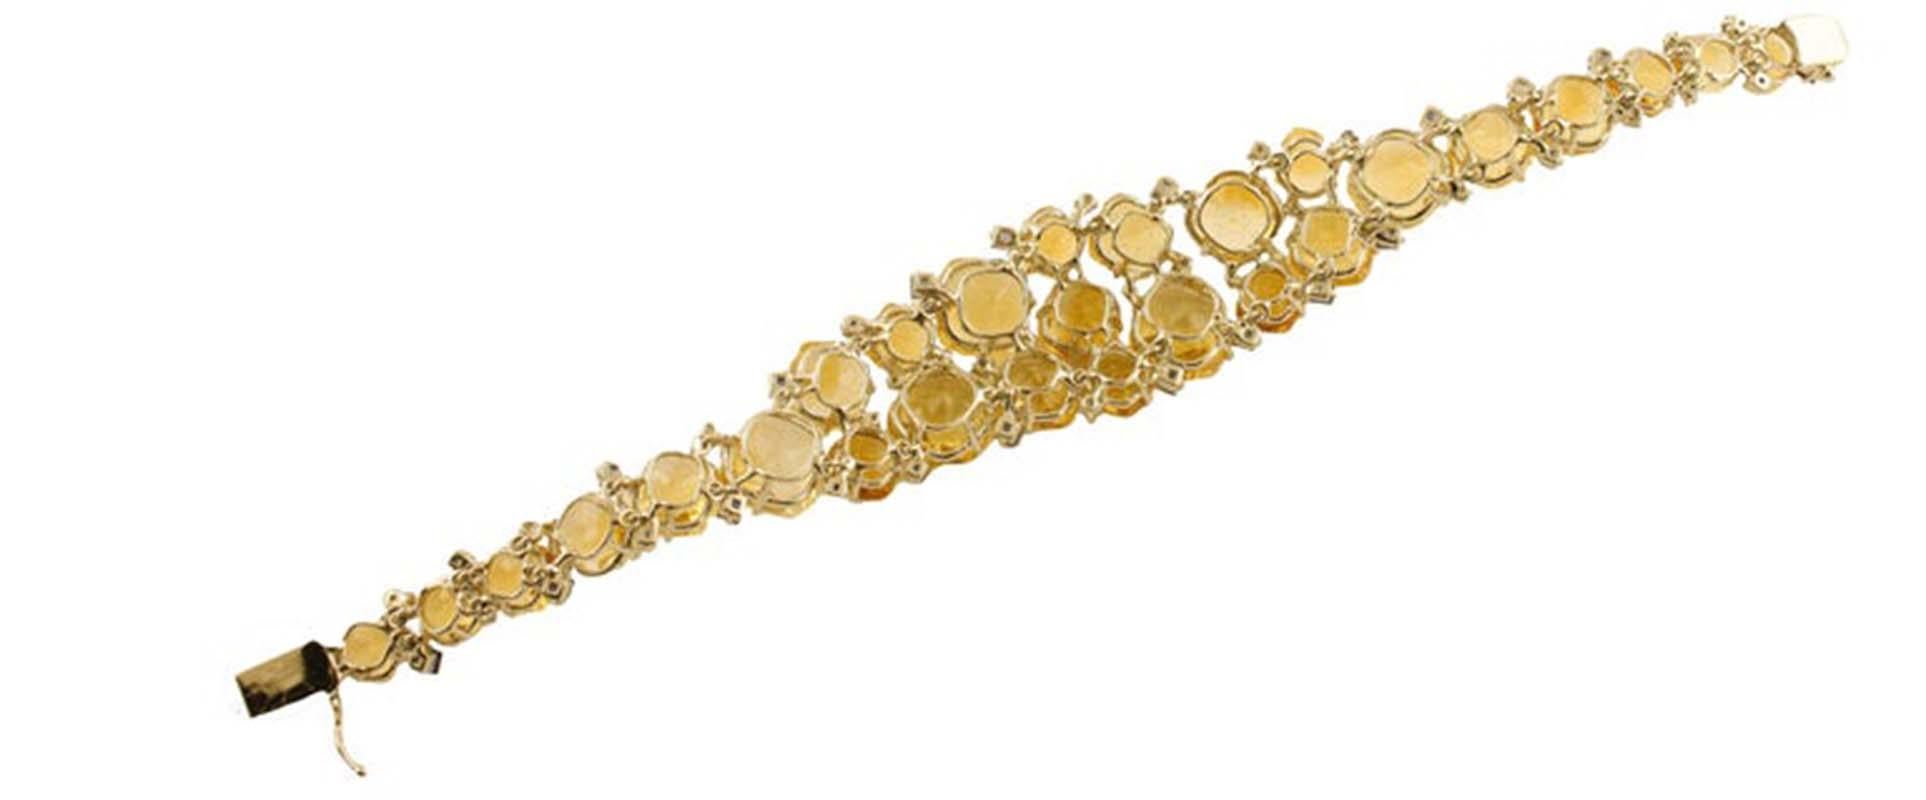 Retro Topazs, Sapphires, Diamonds, 14 Karat White Gold Retrò Bracelet. For Sale